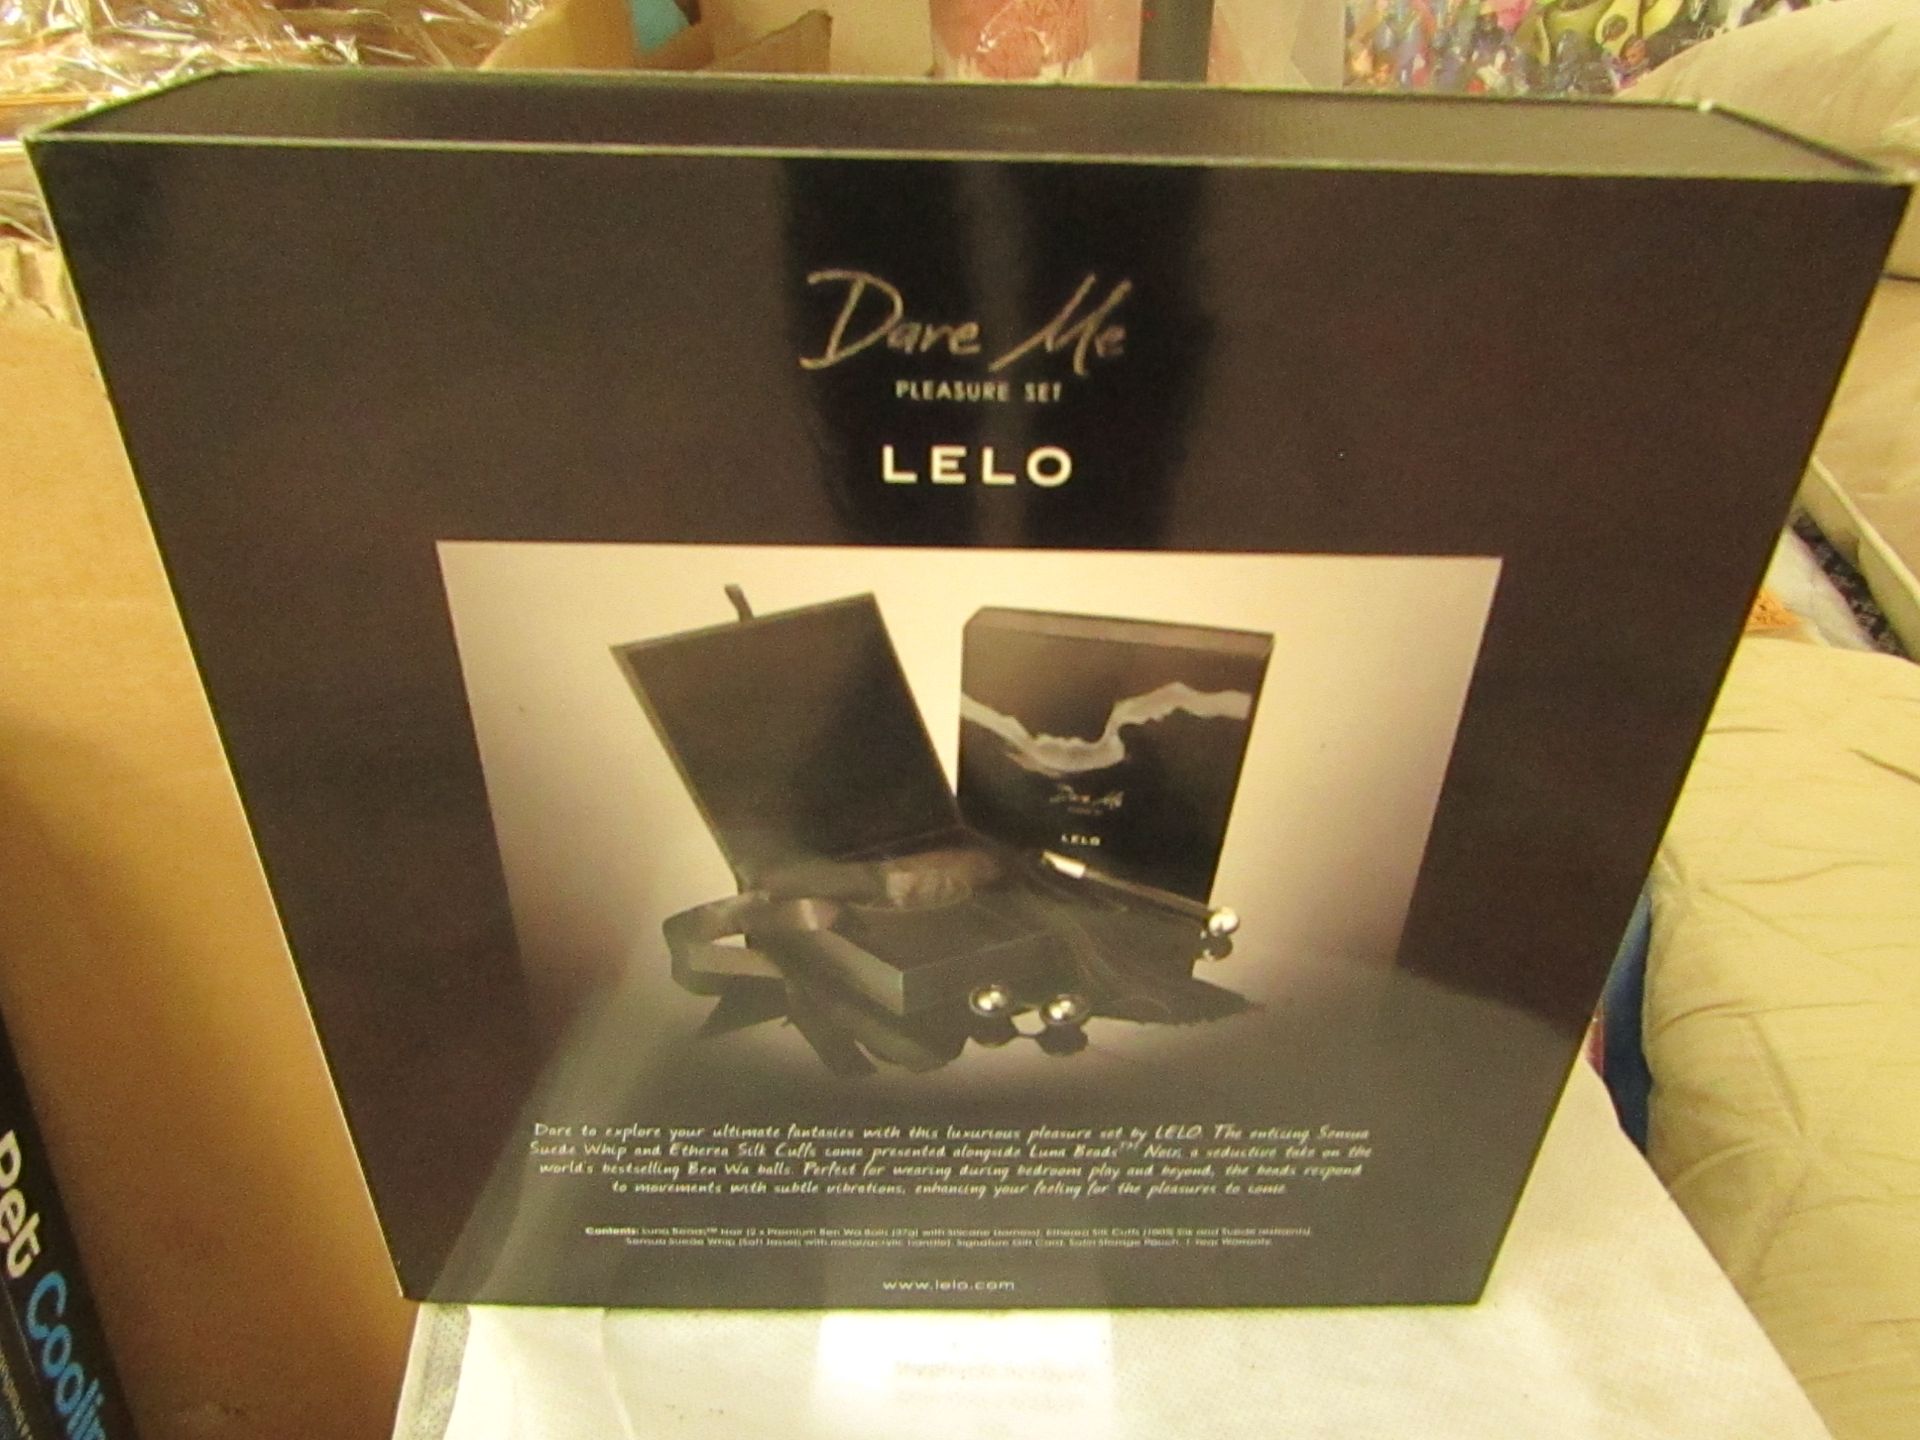 Lelo - Dare Me Pleasure Set (Adult) - New & Boxed.